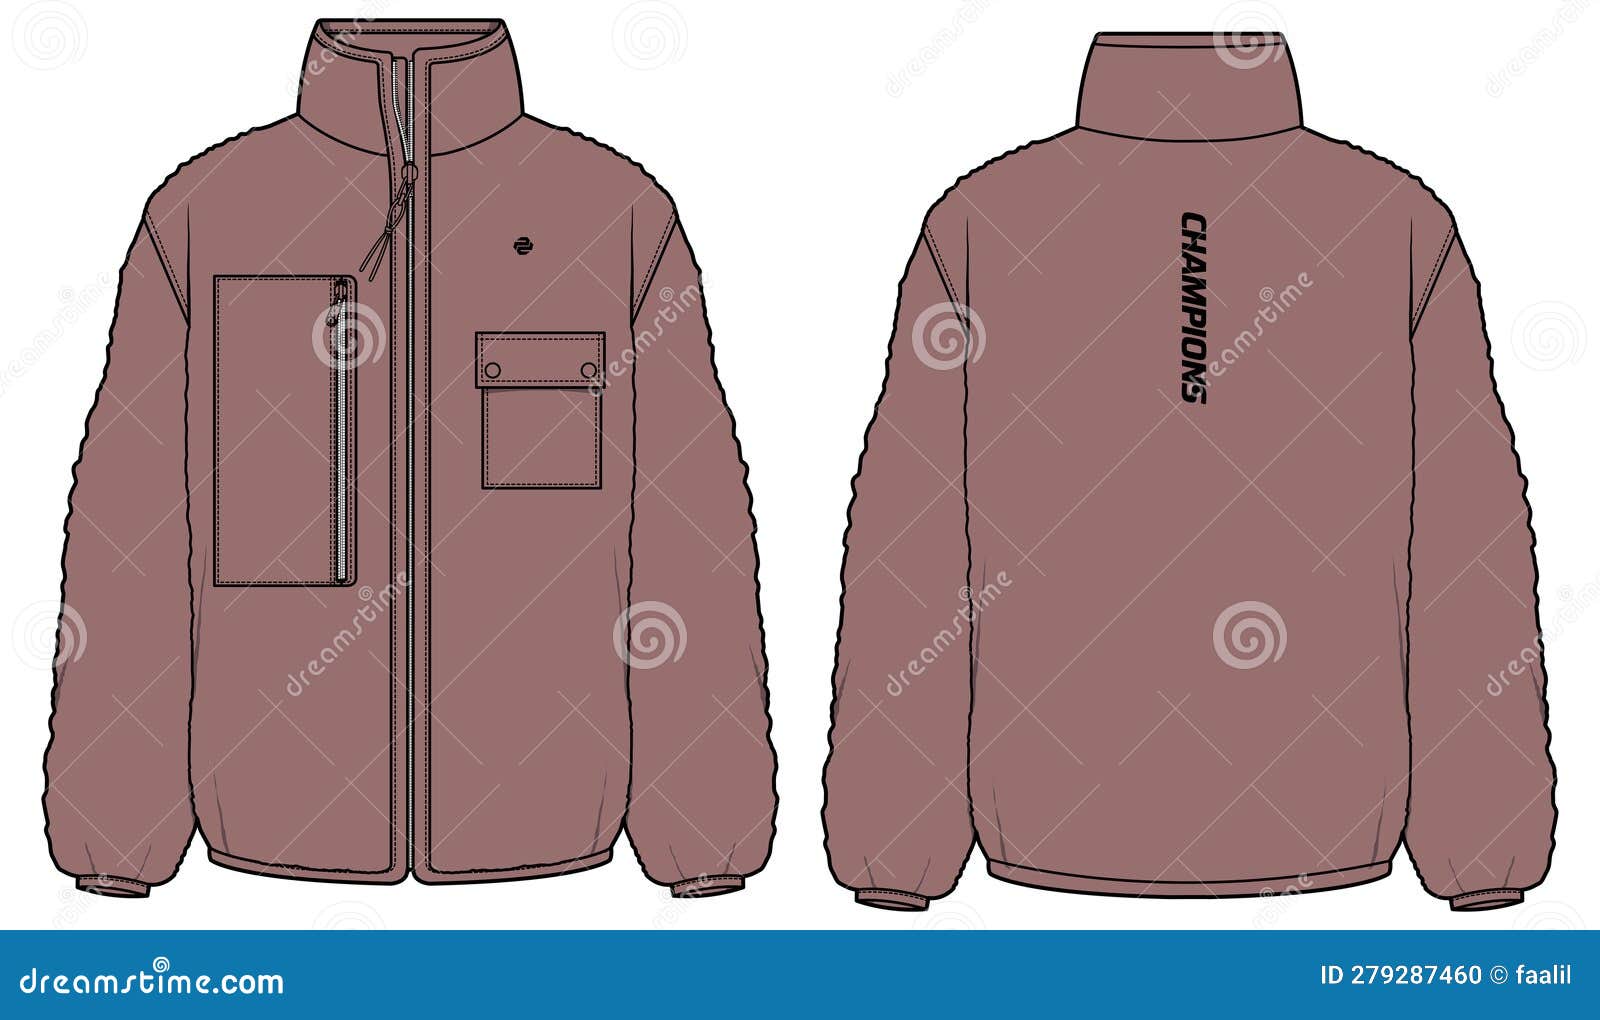 Long Sleeve Fleece Jacket Design Flat Sketch Illustration, Jacket with ...